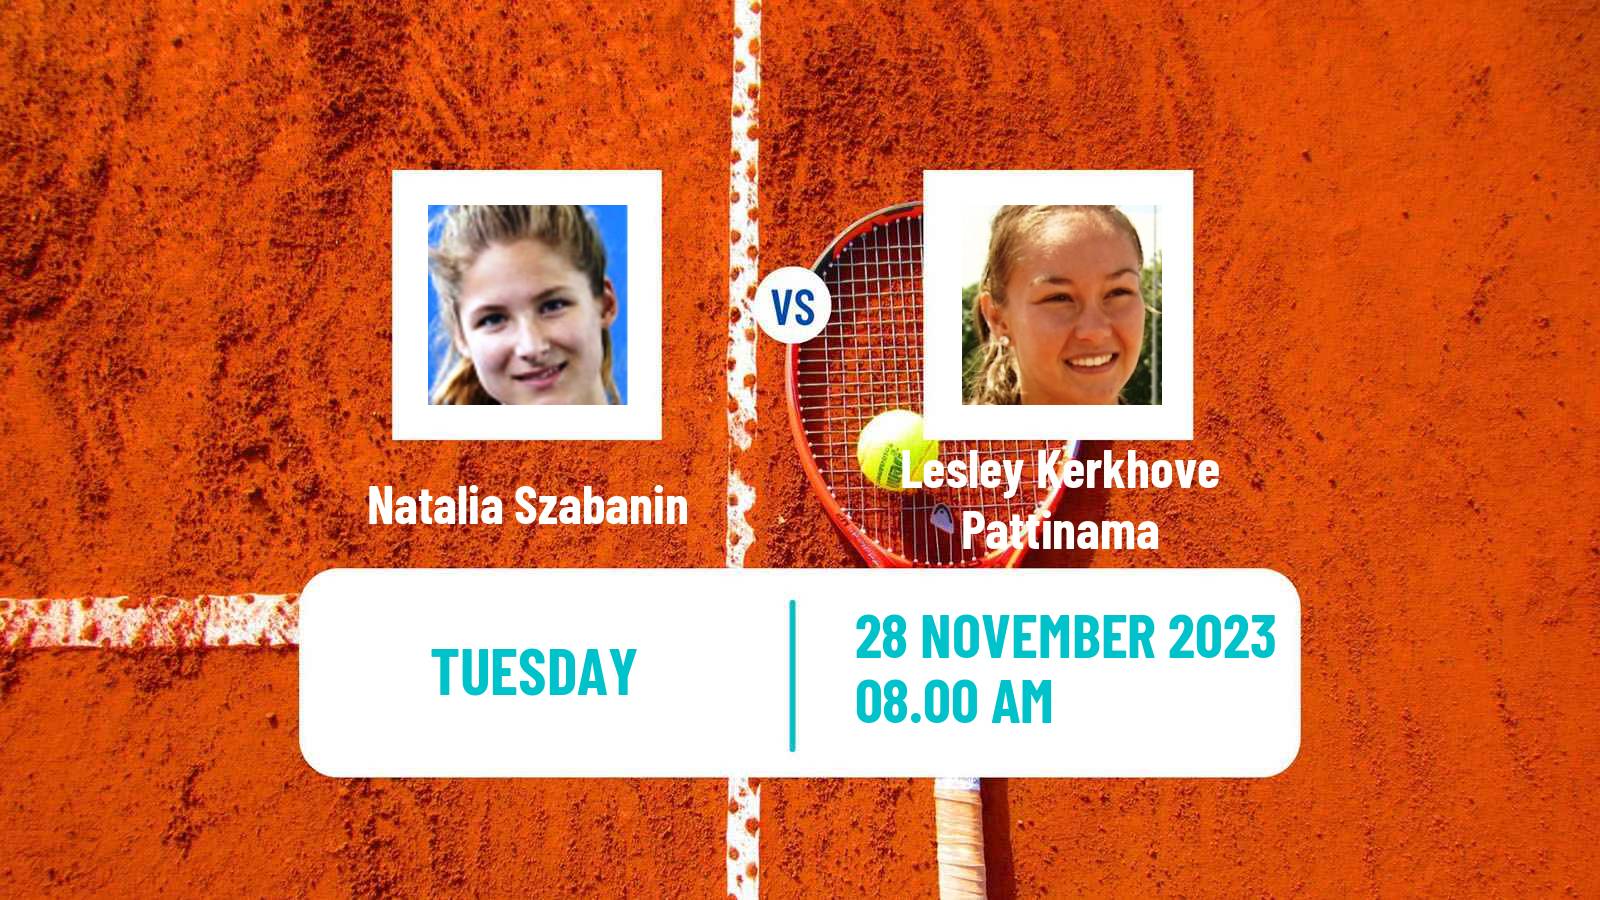 Tennis ITF W25 Lousada 2 Women Natalia Szabanin - Lesley Kerkhove Pattinama